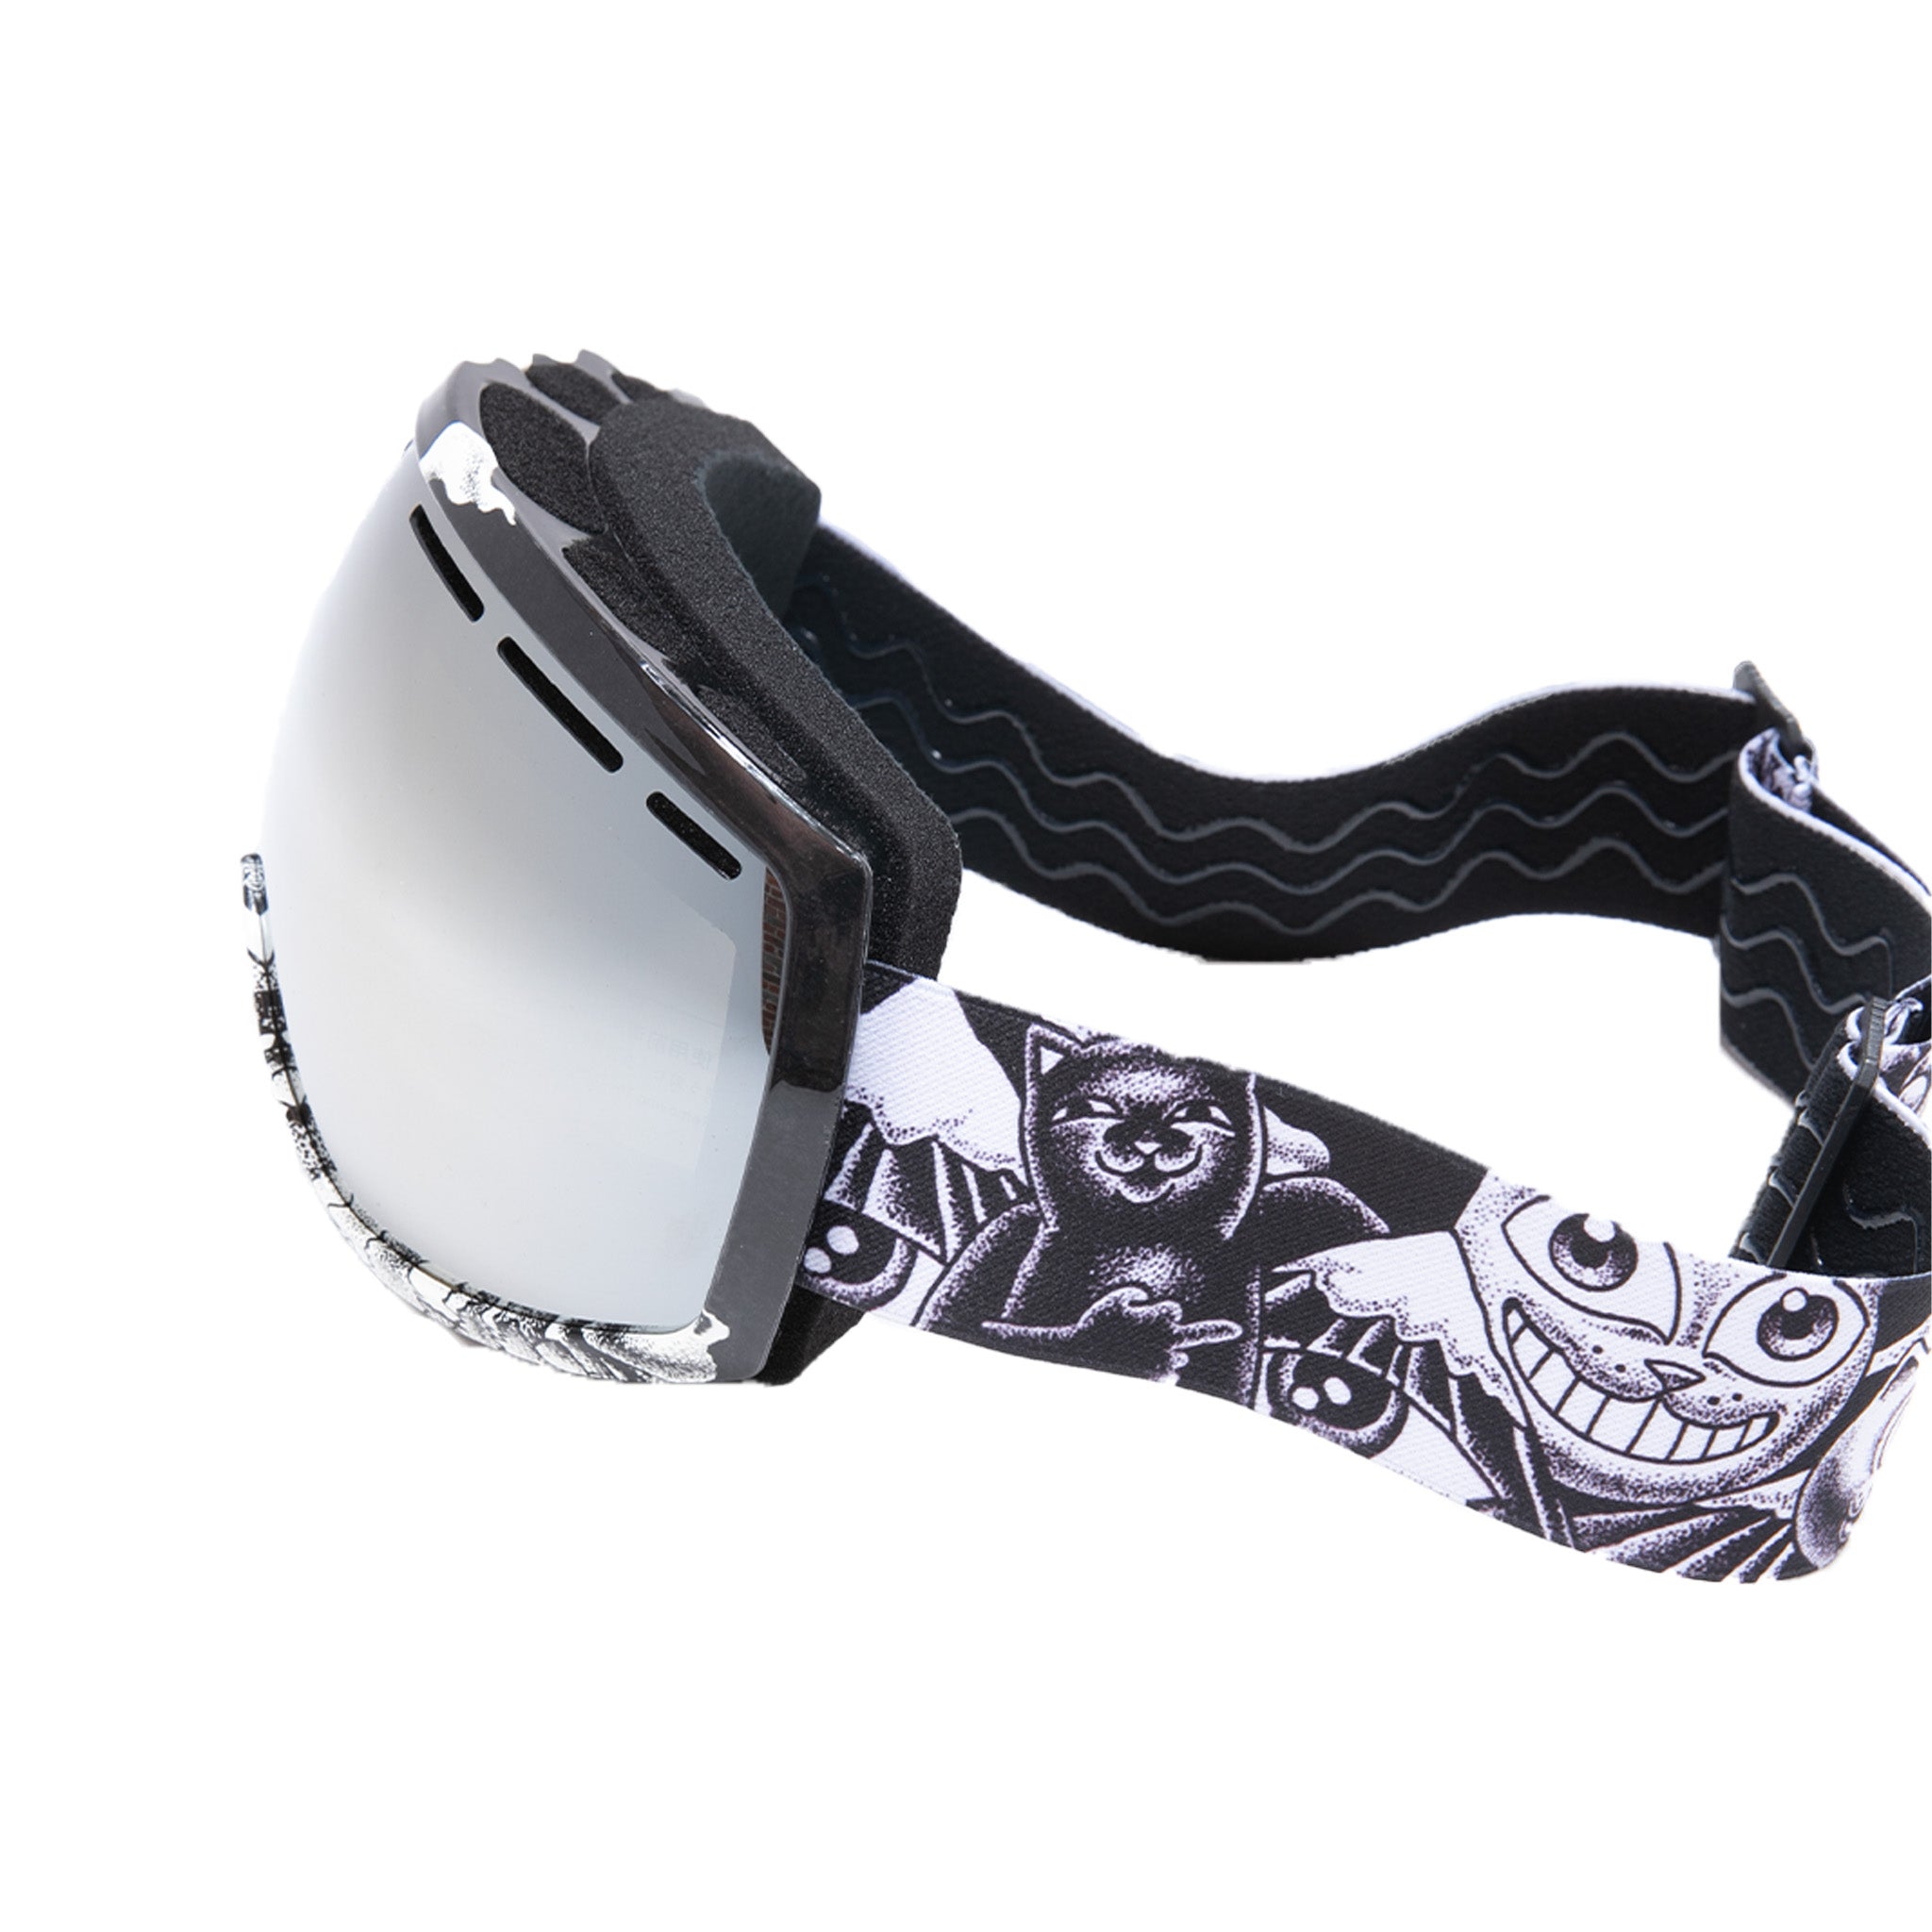 RIPNDIP Dark Twisted Fantasy Snow Goggles (Black/White)